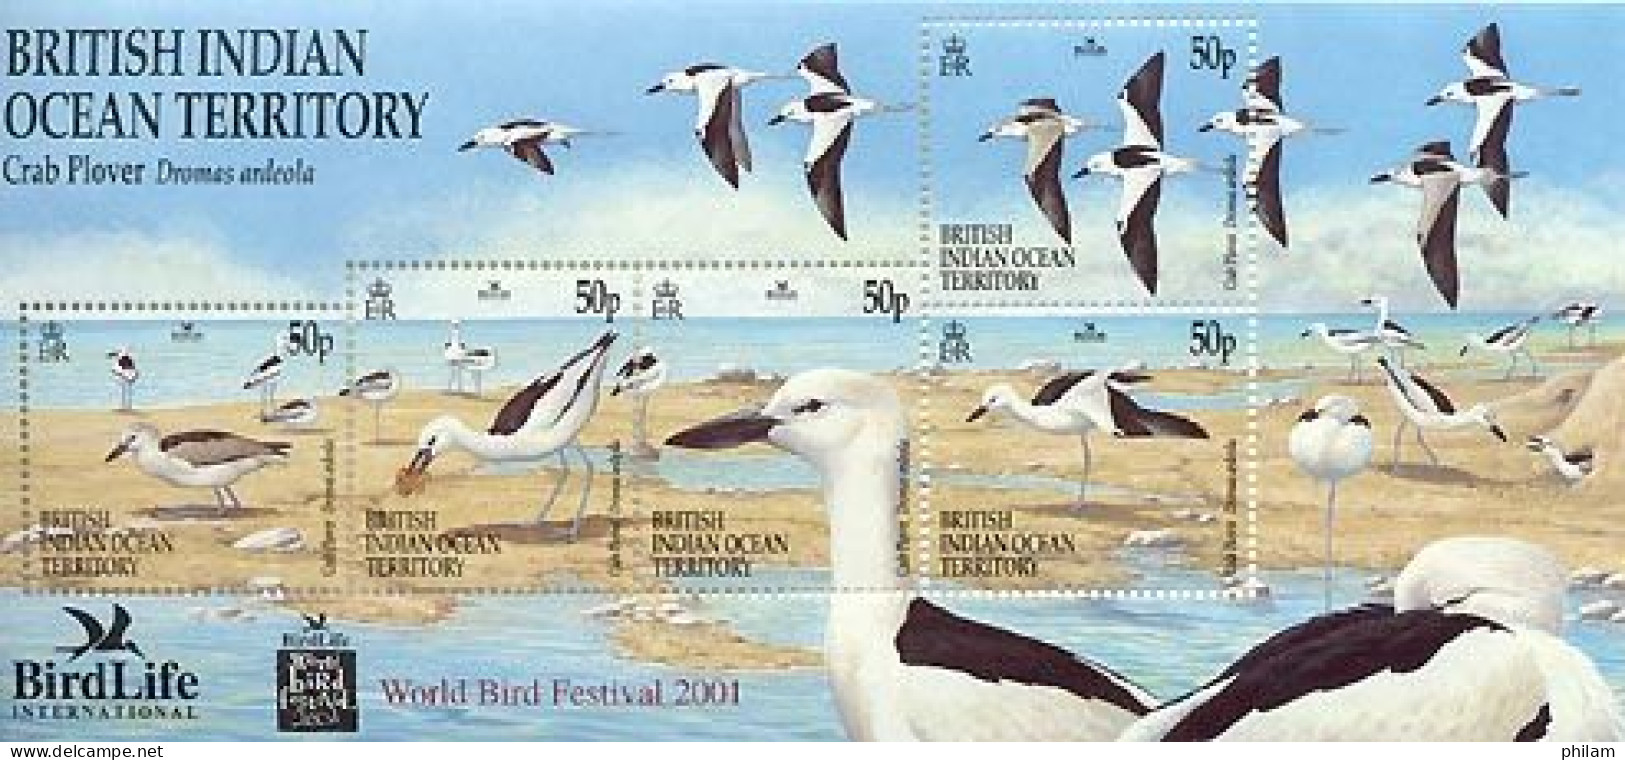 BIOT 2001 - Birdlife - Crab Plover - BF - British Indian Ocean Territory (BIOT)